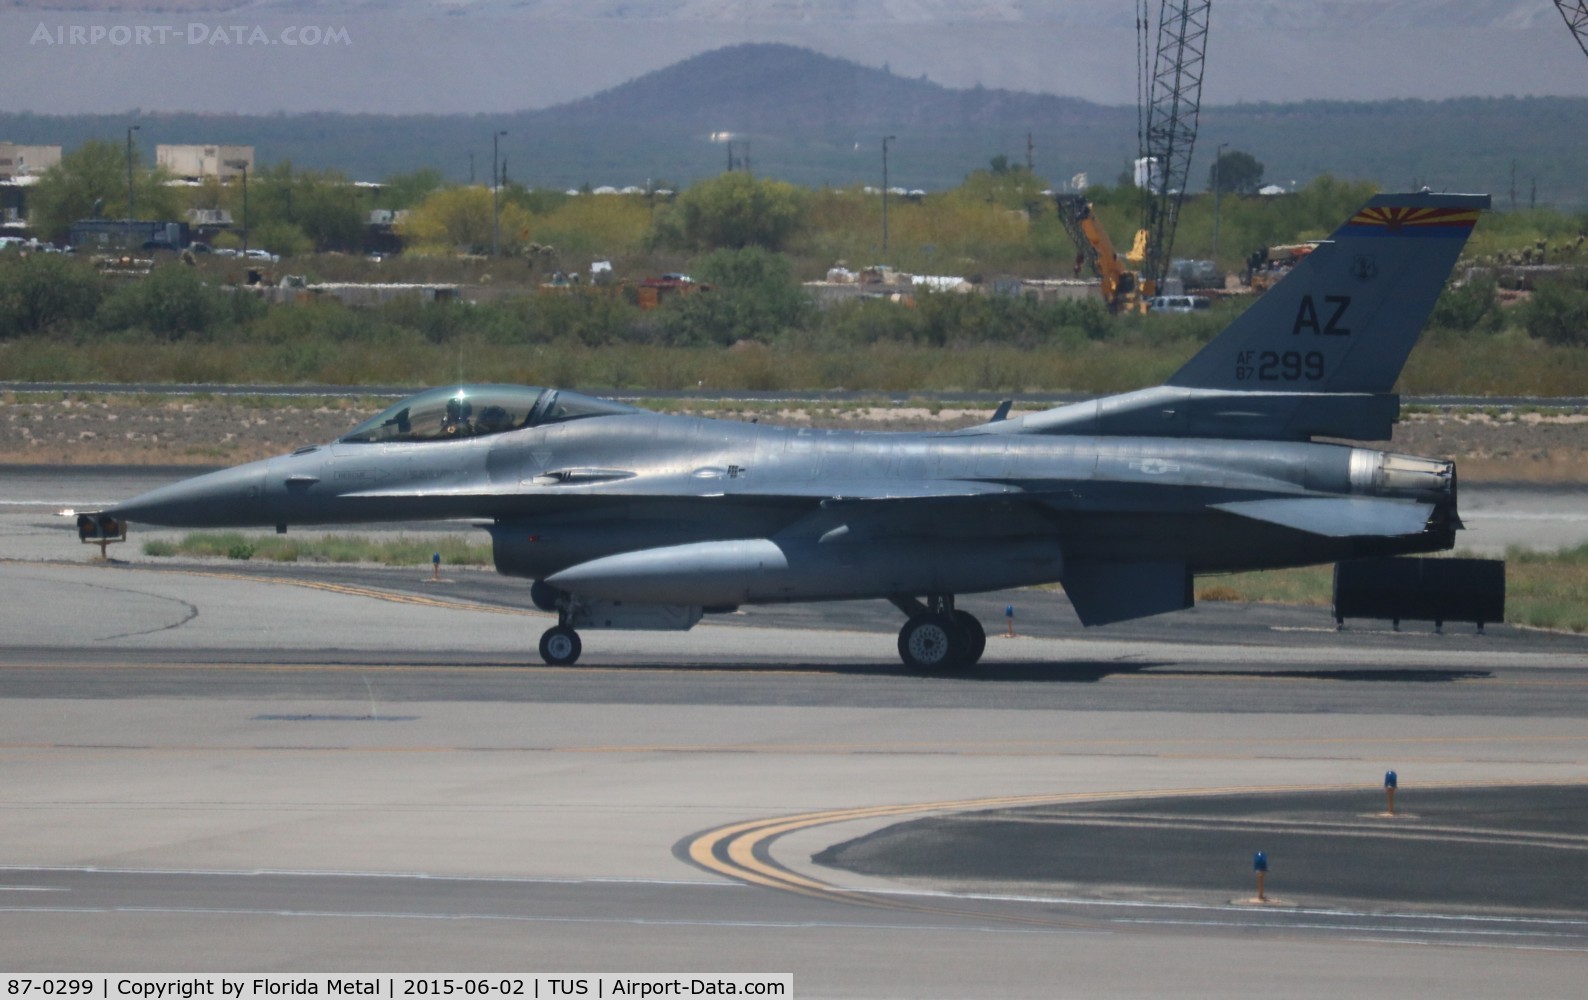 87-0299, 1987 General Dynamics F-16C Fighting Falcon C/N 5C-560, F-16C